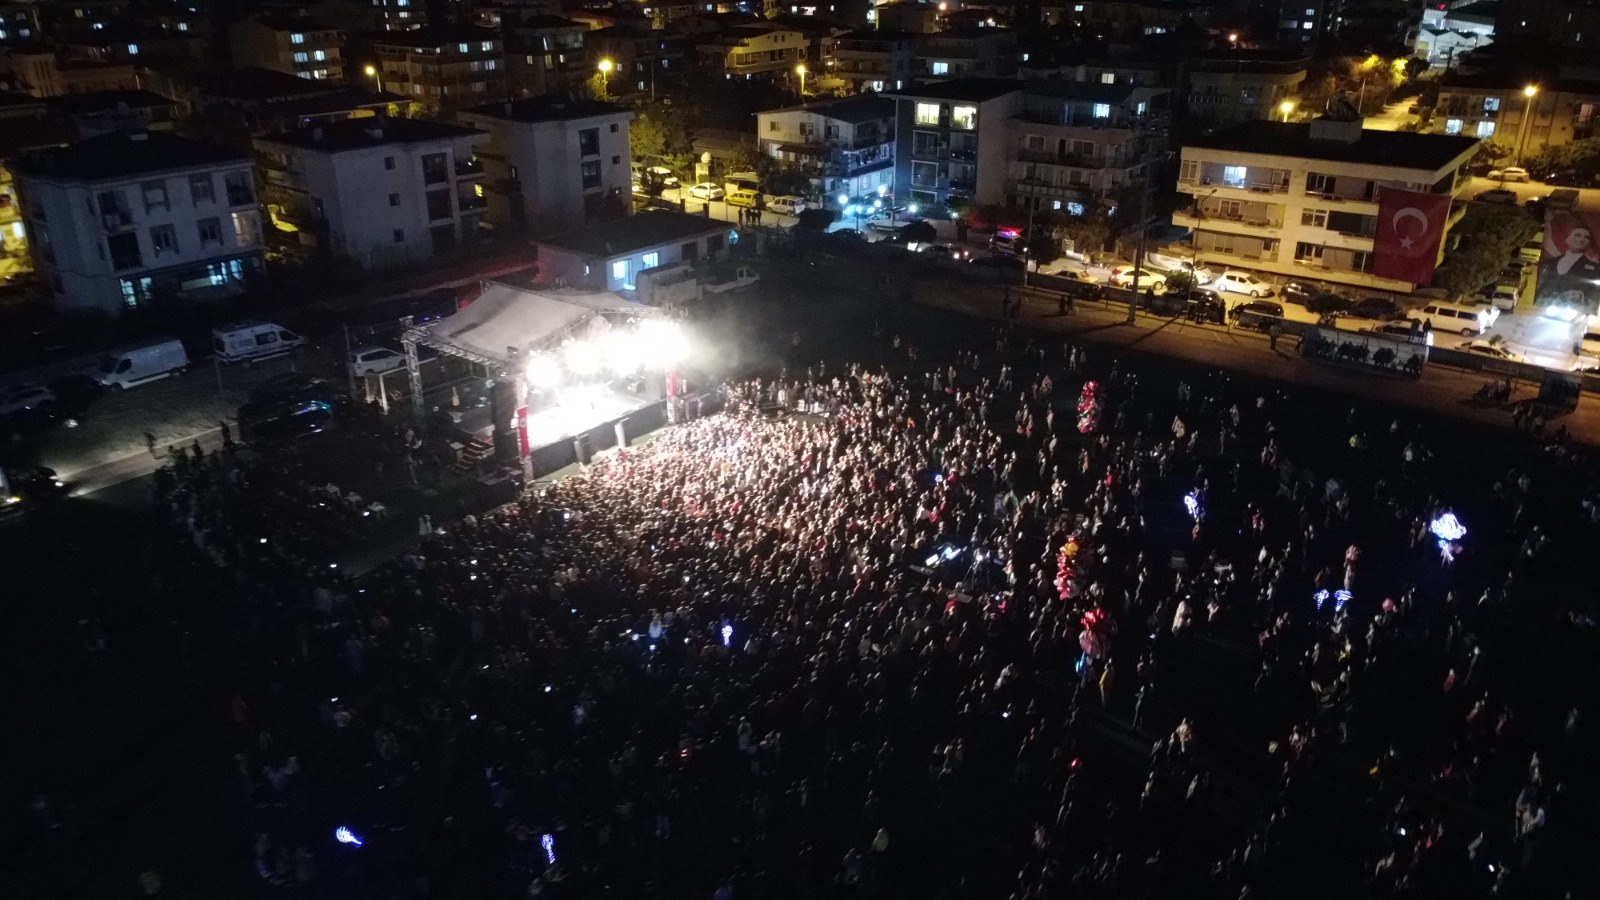 Menderes’te Mandalina Festivali’ne Büyük İlgi